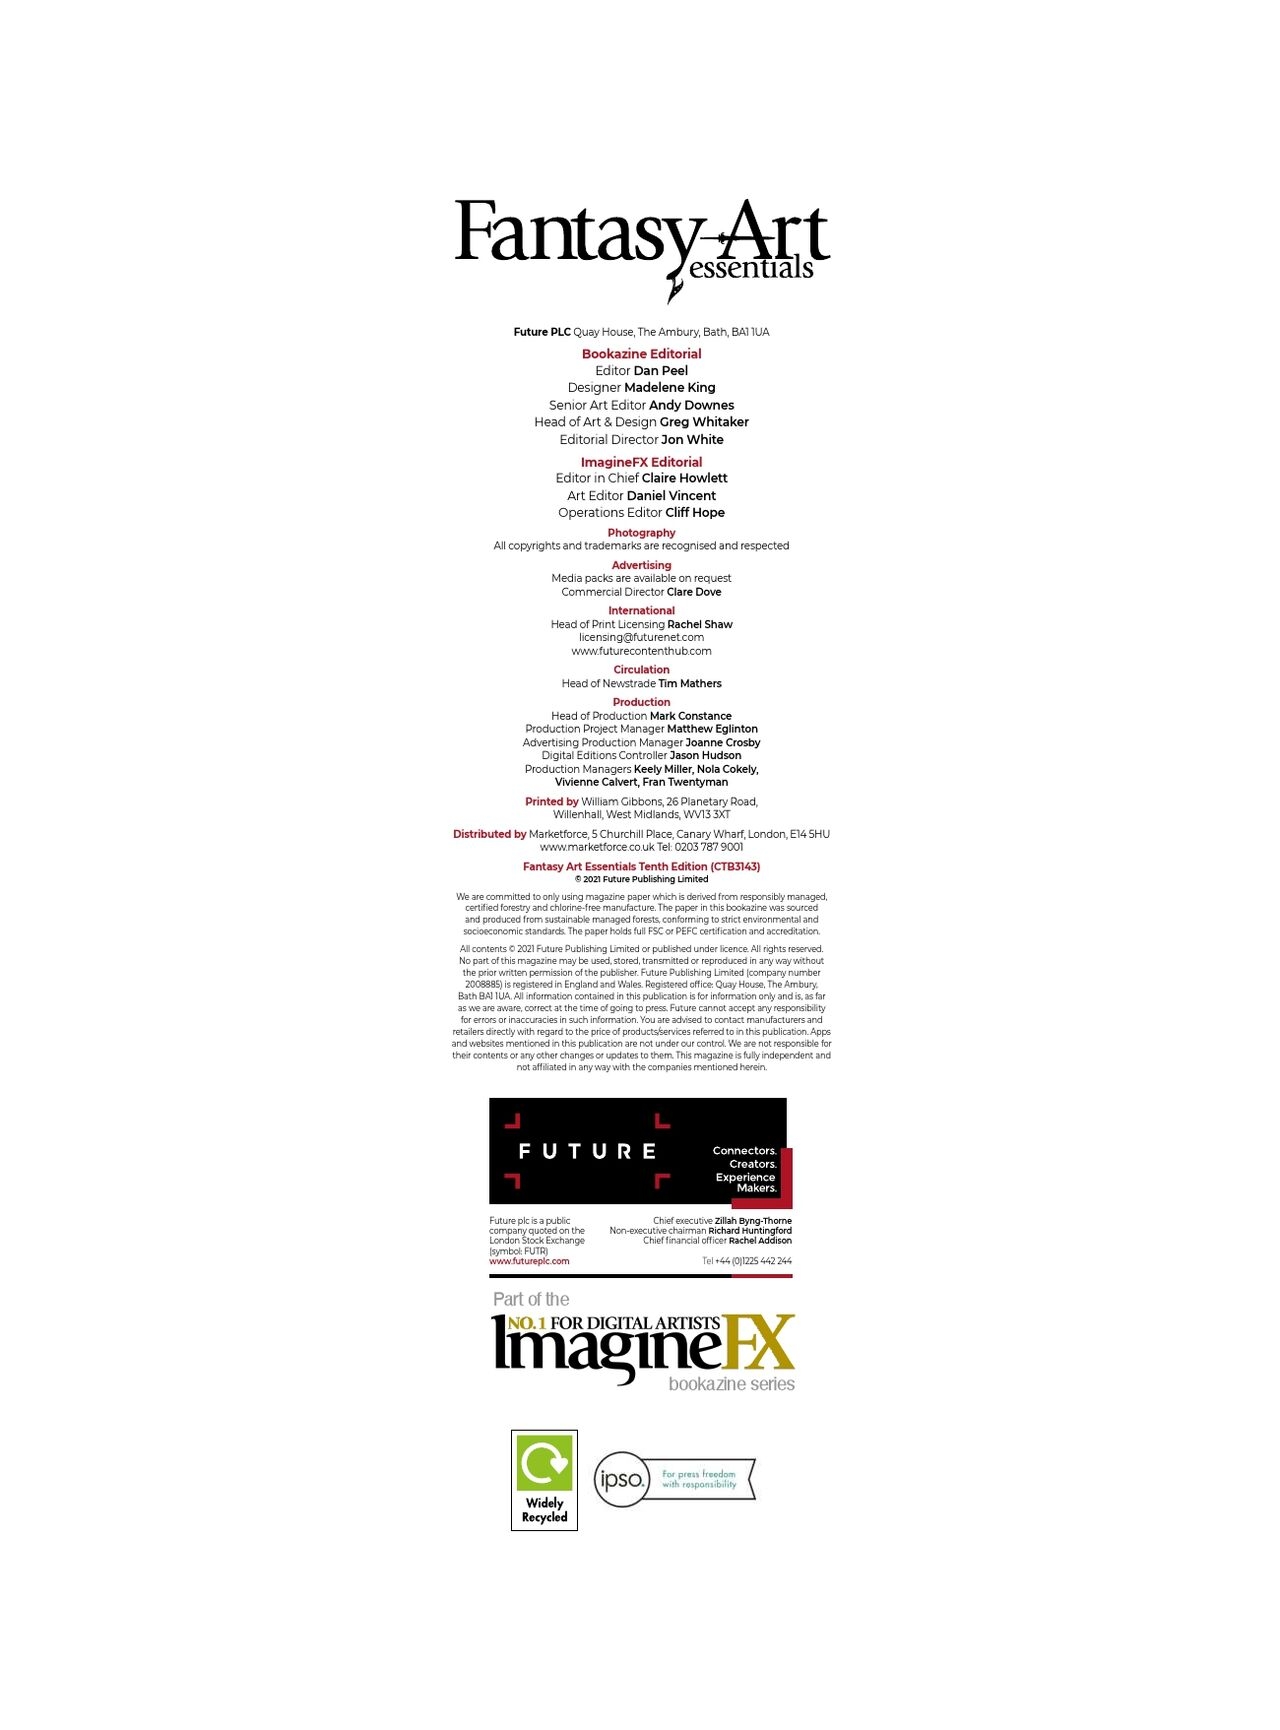 ImagineFX 2021 - Fantasy Art Essentials [English] 4